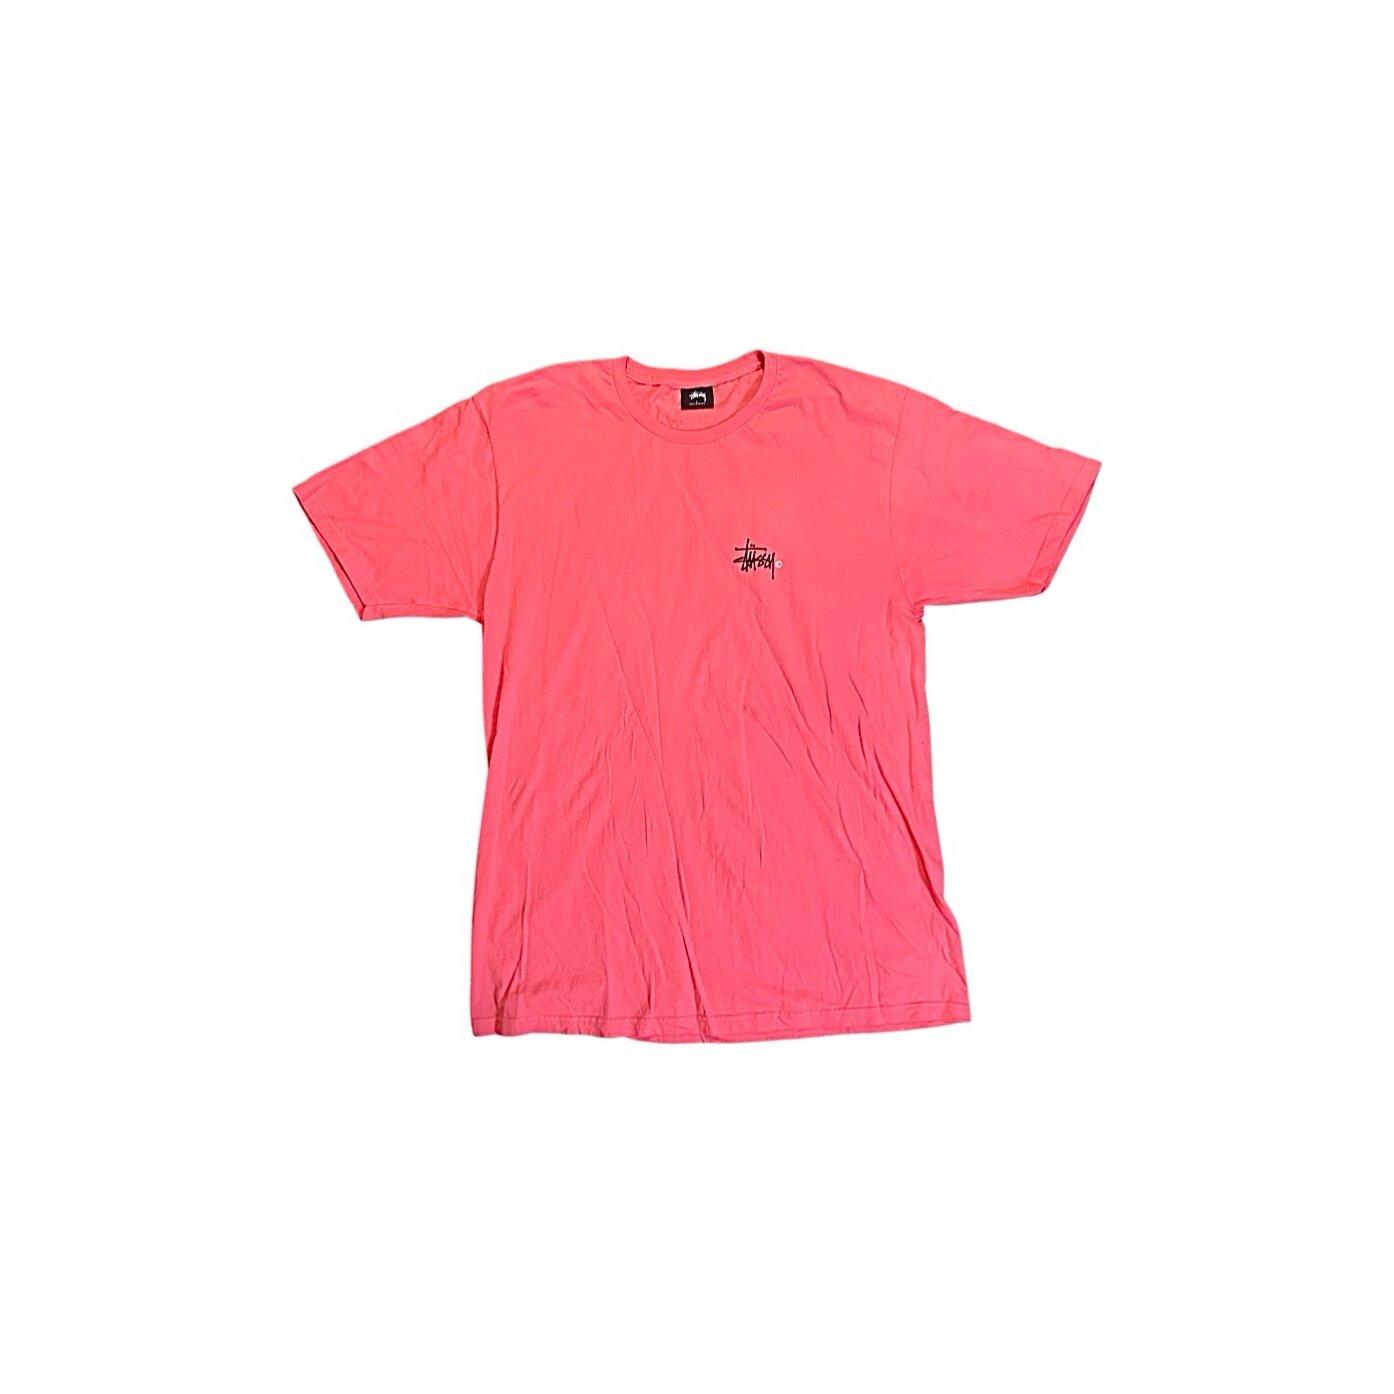 Stussy pink T-shirt size XL — DA PROJECT GALLERY